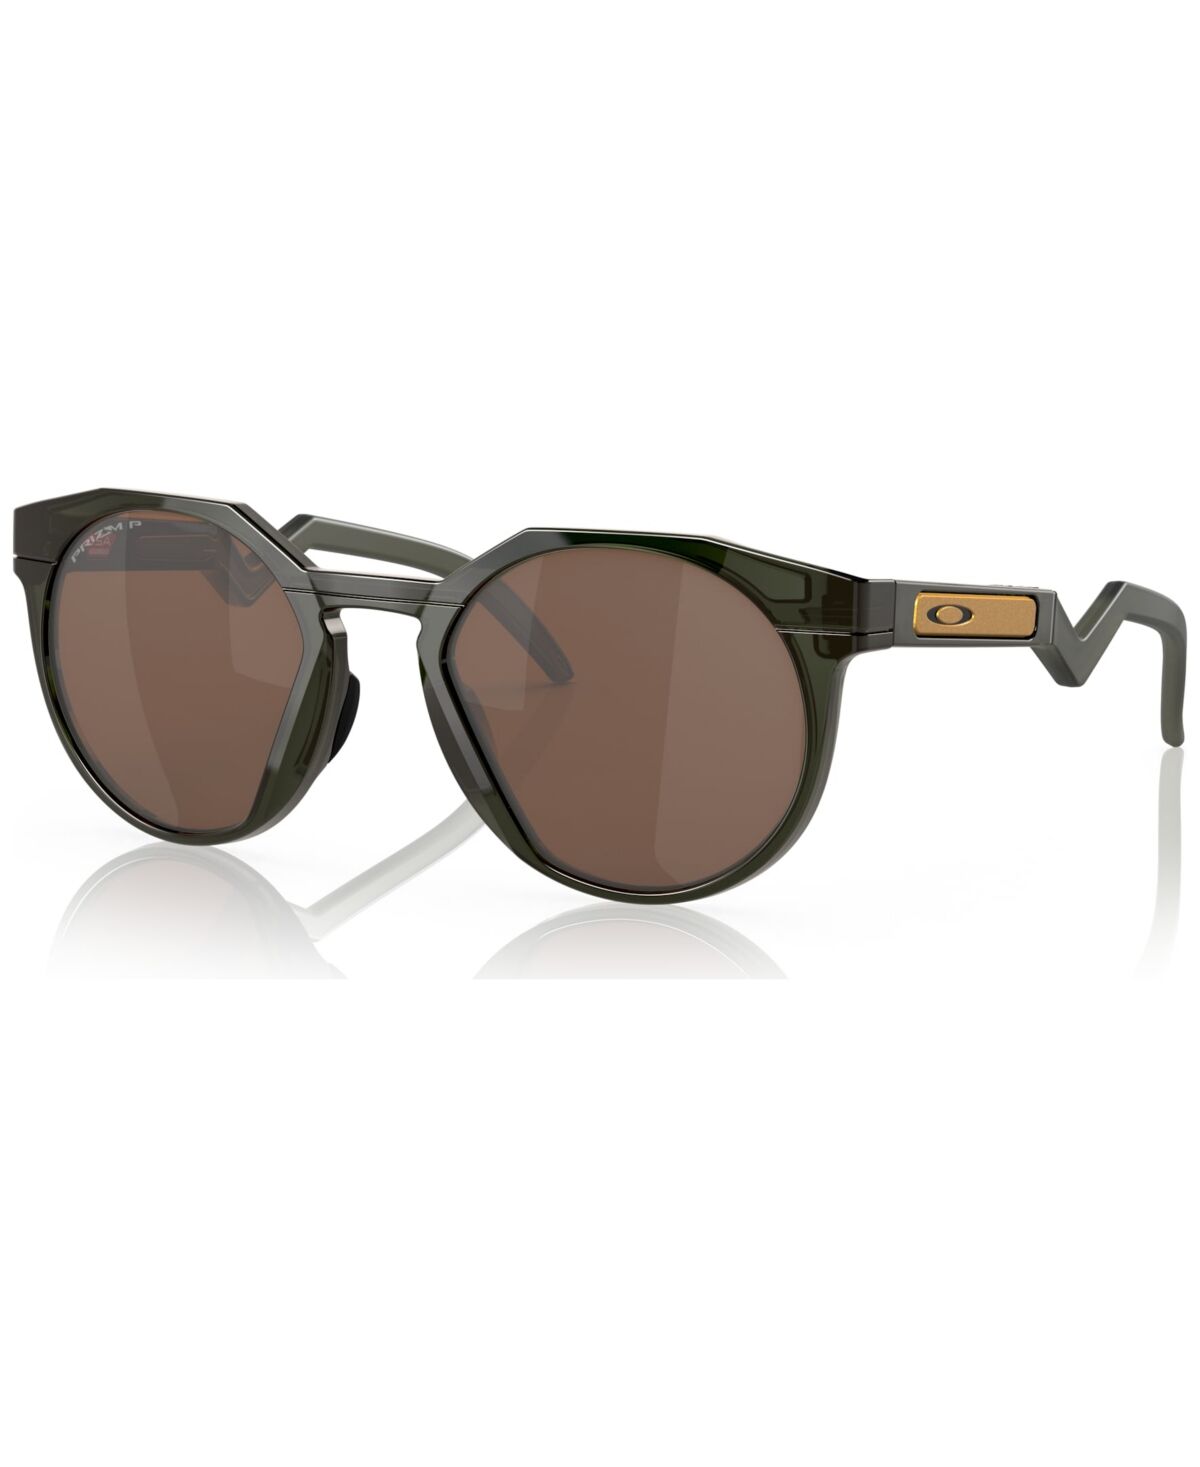 Oakley Men's Polarized Sunglasses, Hstn - Olive Ink